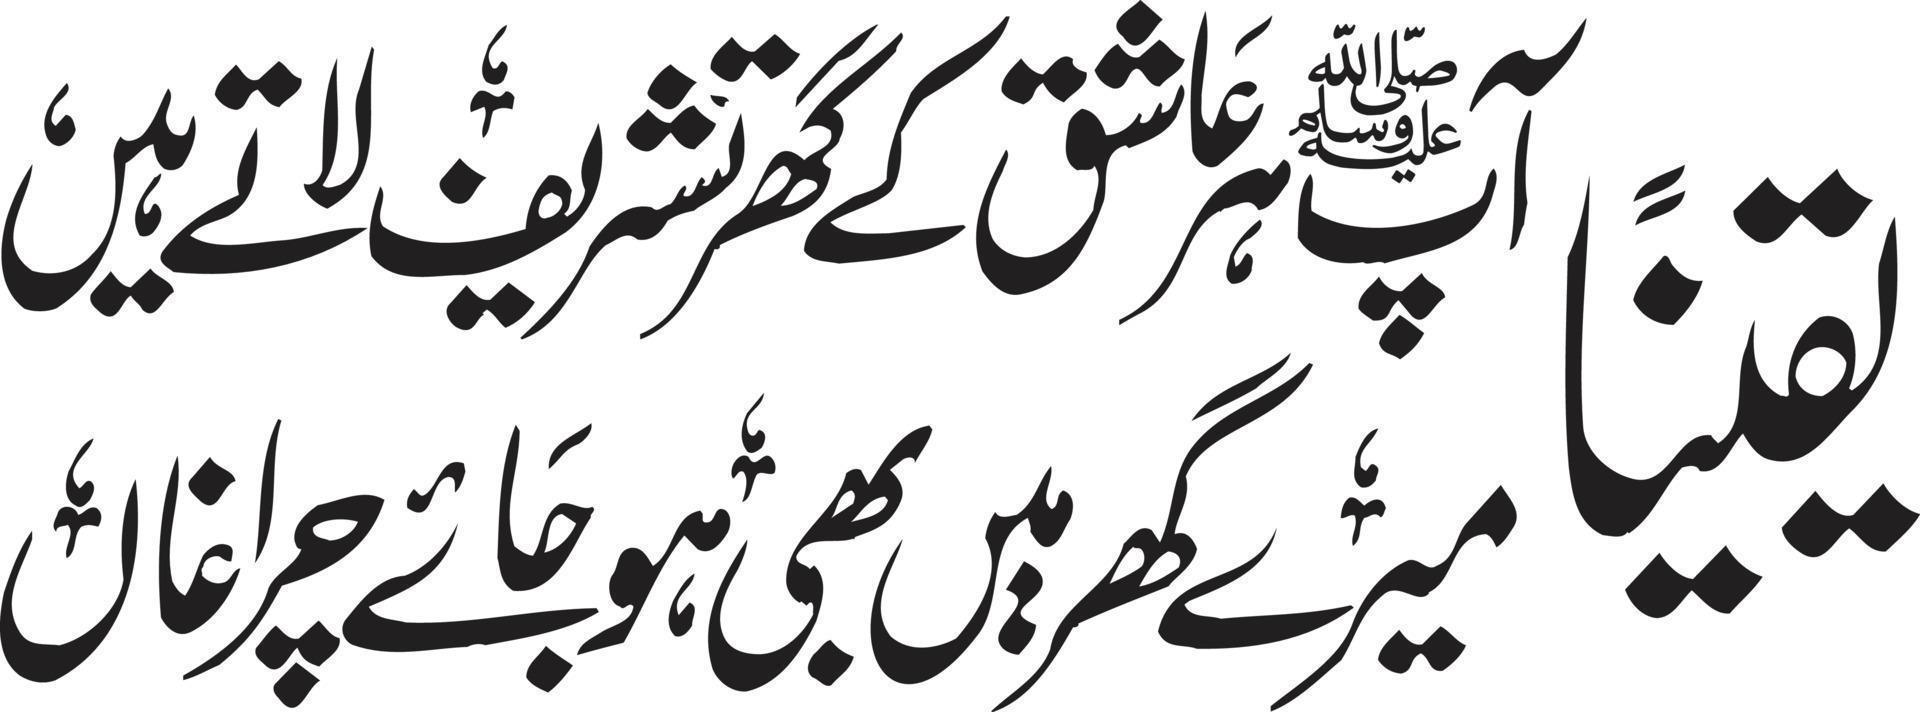 shaer titel islamic kalligrafi fri vektor